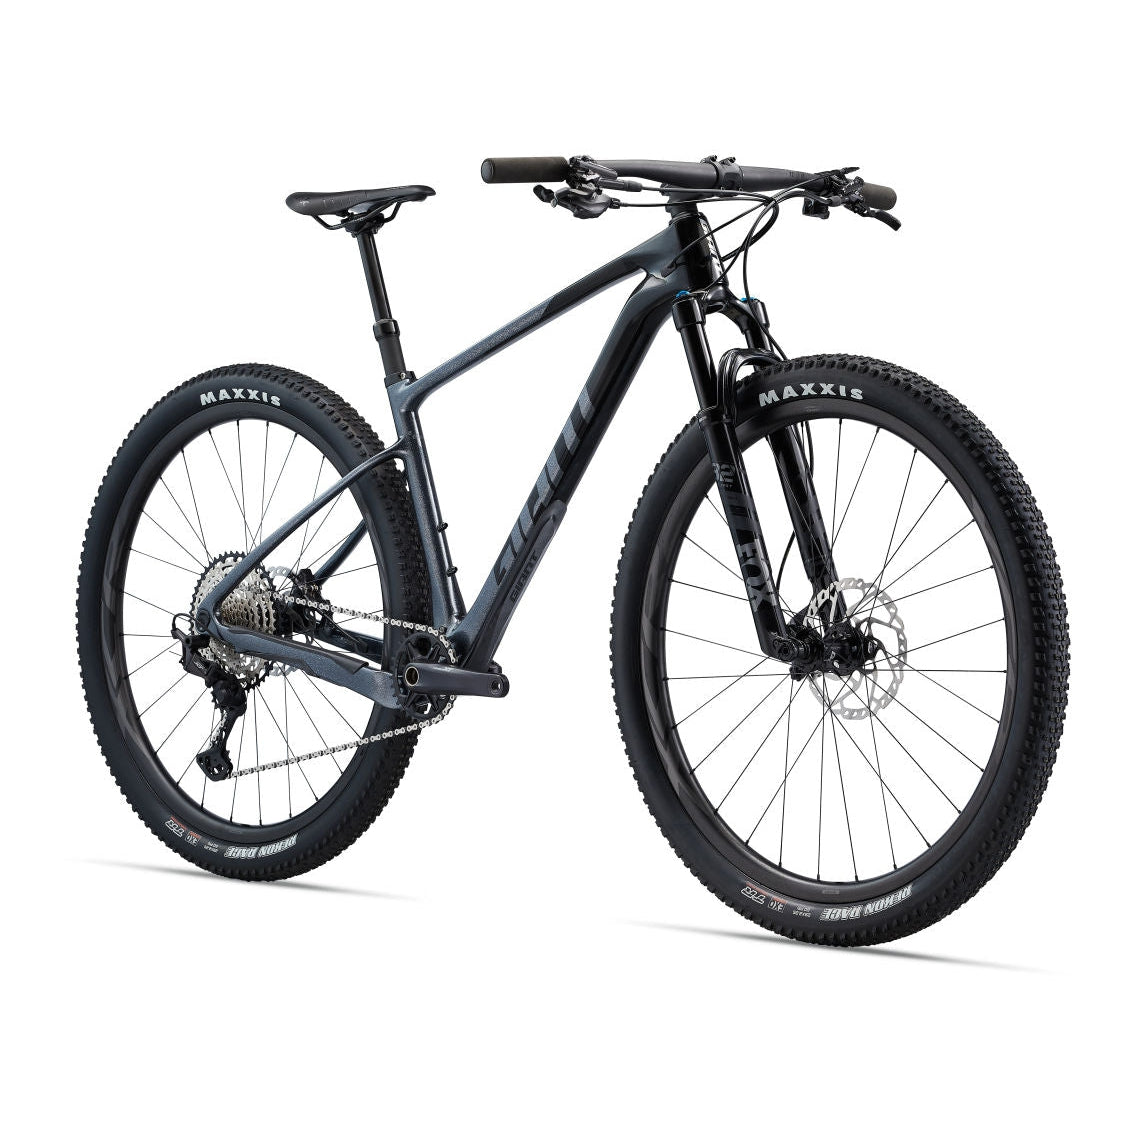 Giant XtC Advanced 29 1 Mountain Bike - Bikes - Bicycle Warehouse